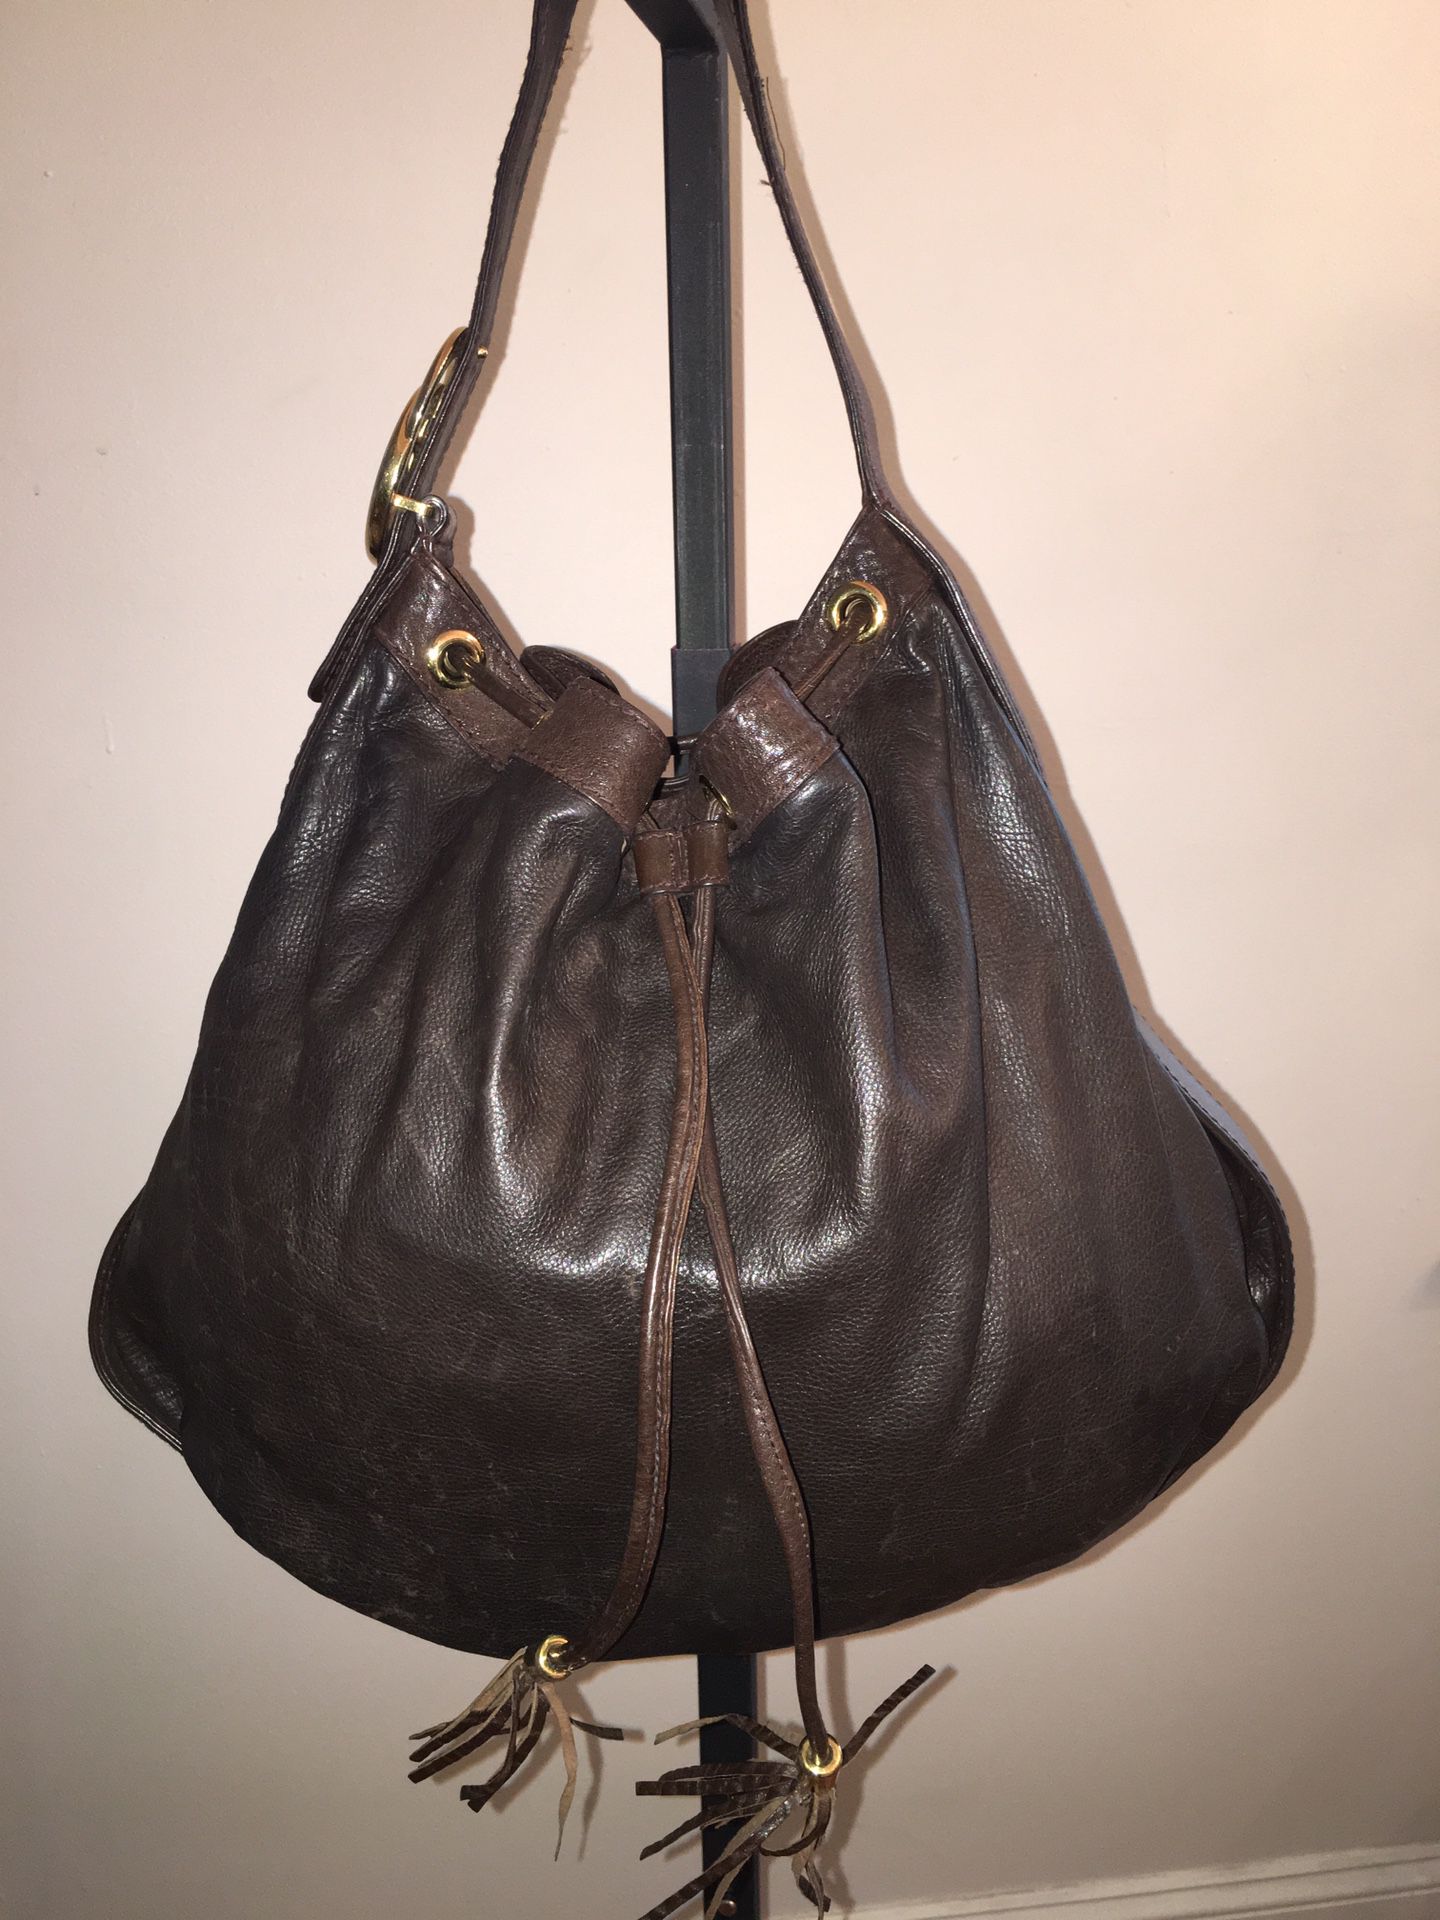 Gucci GUCCISSIMA brown leather hobo sac bag